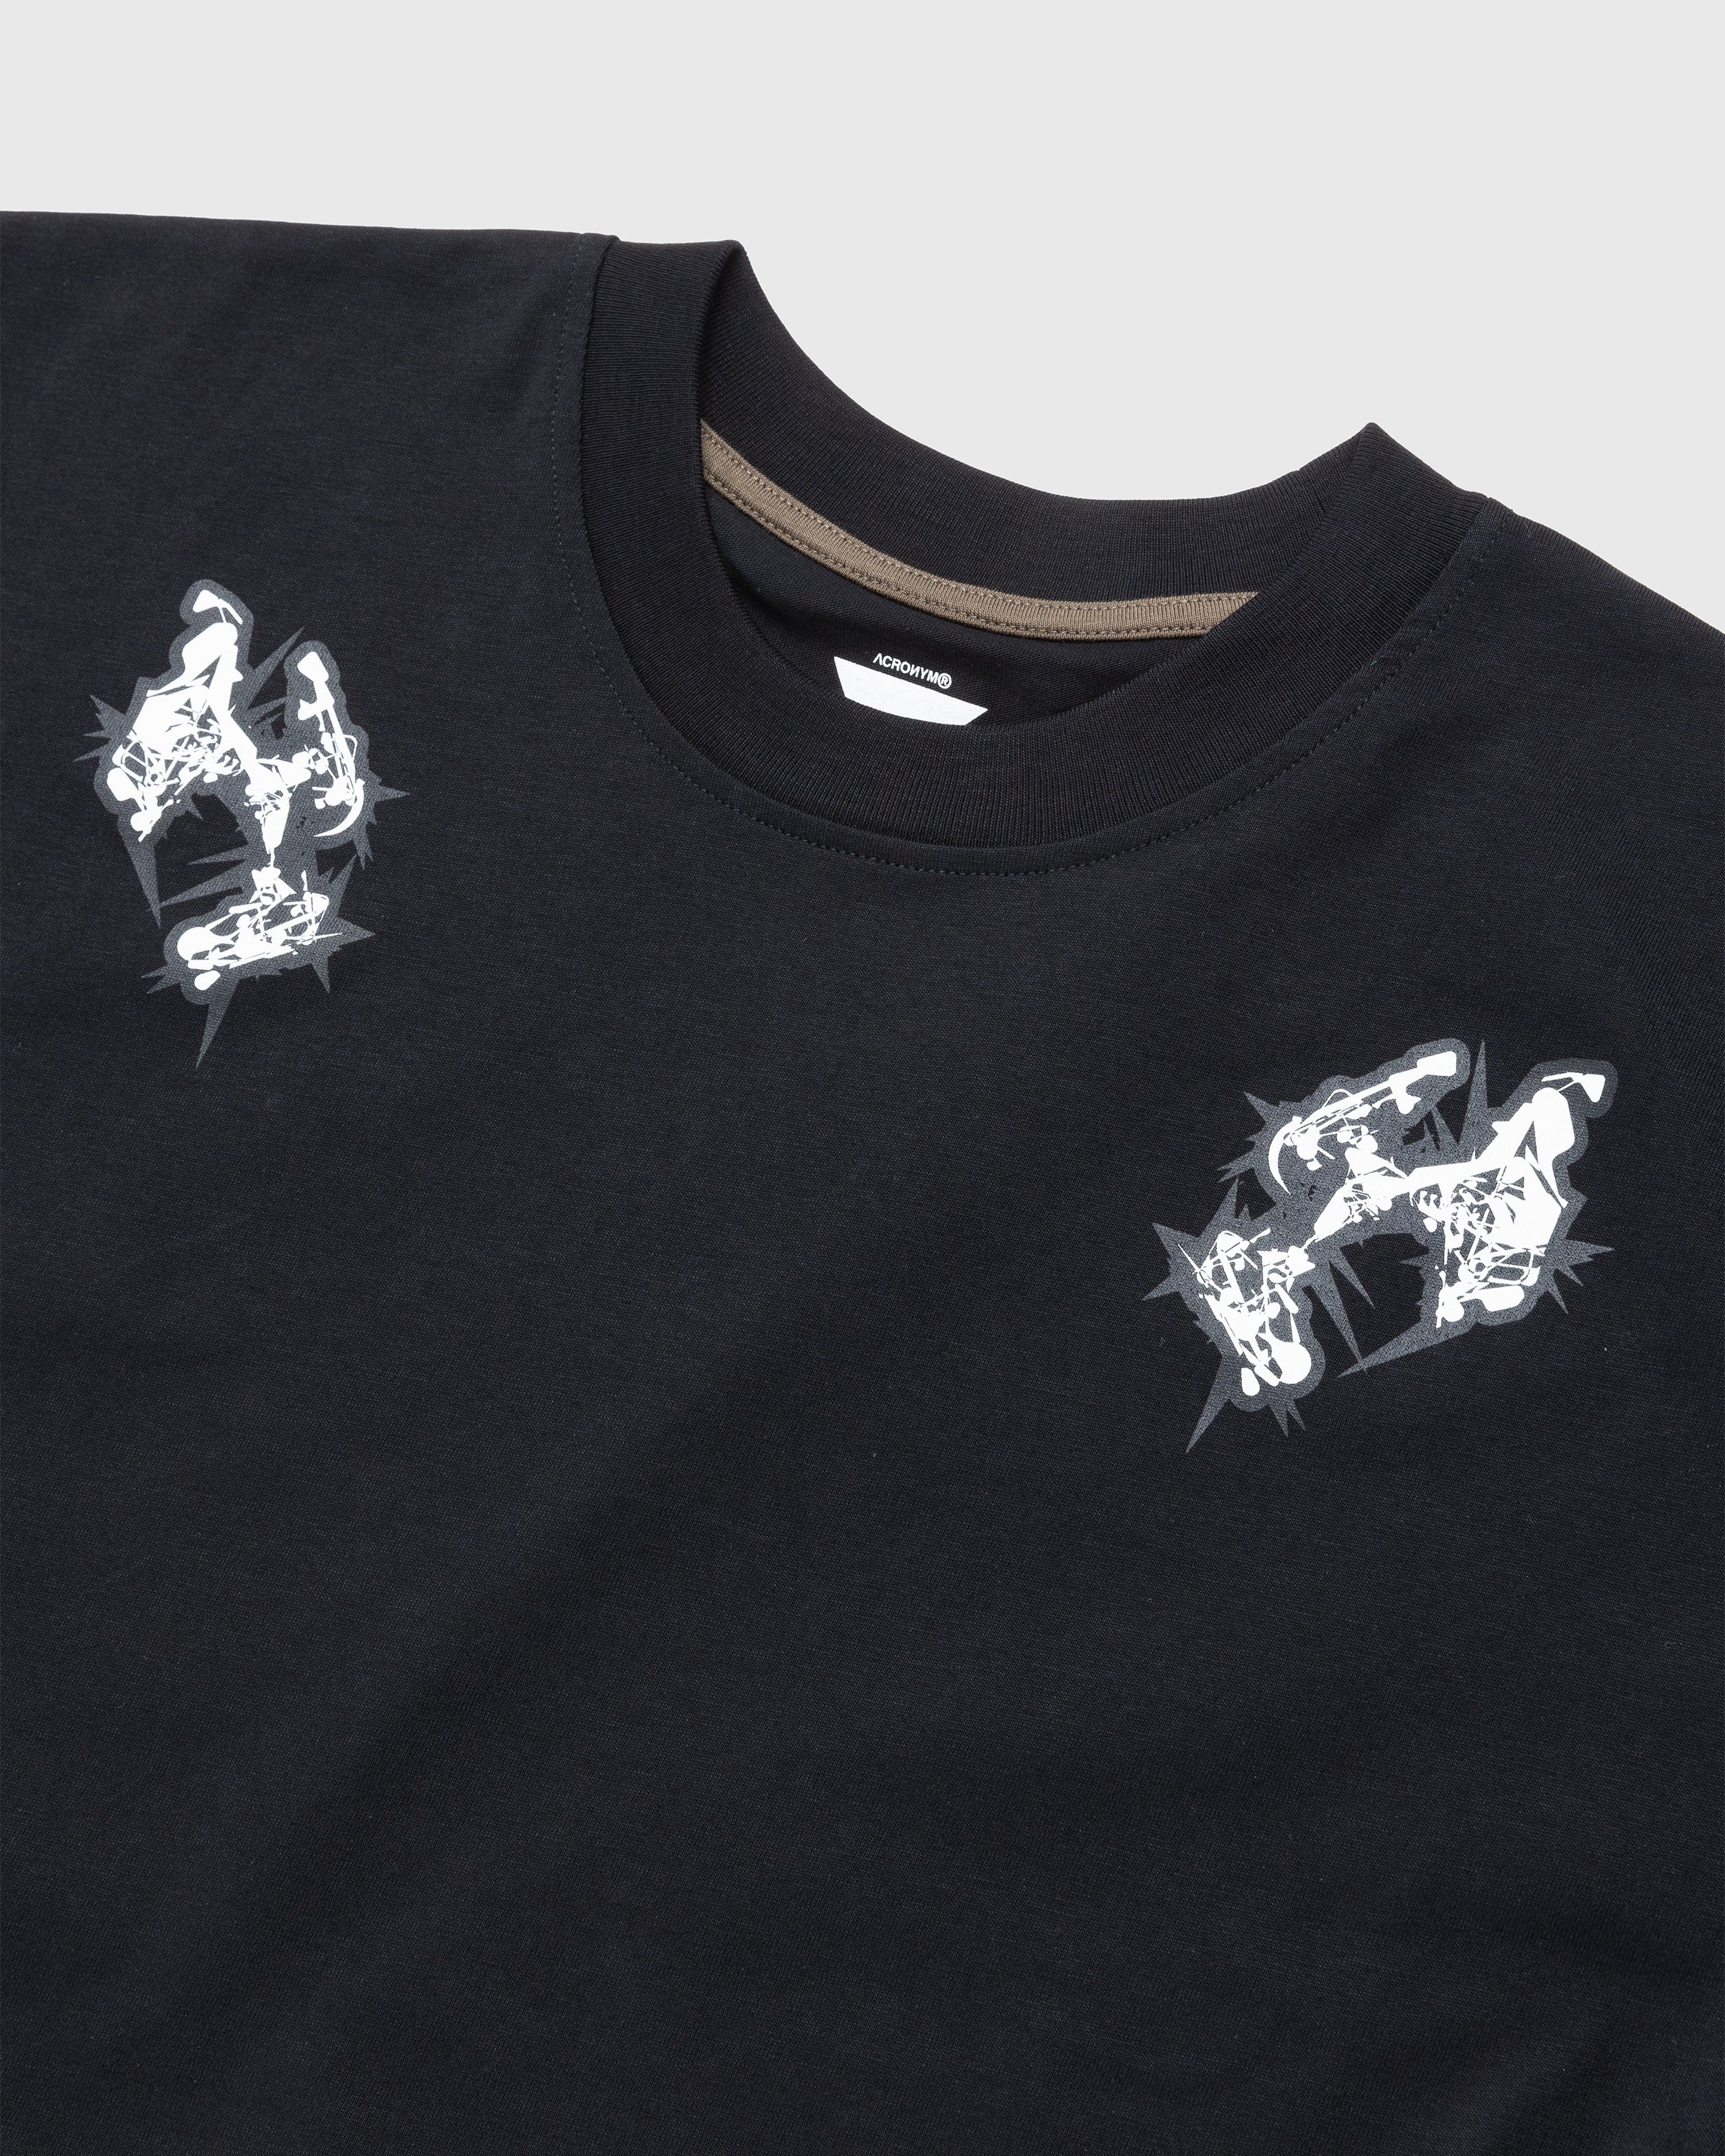 ACRONYM - S28-PR-B Organic Cotton T-Shirt Black - Clothing - Black - Image 3